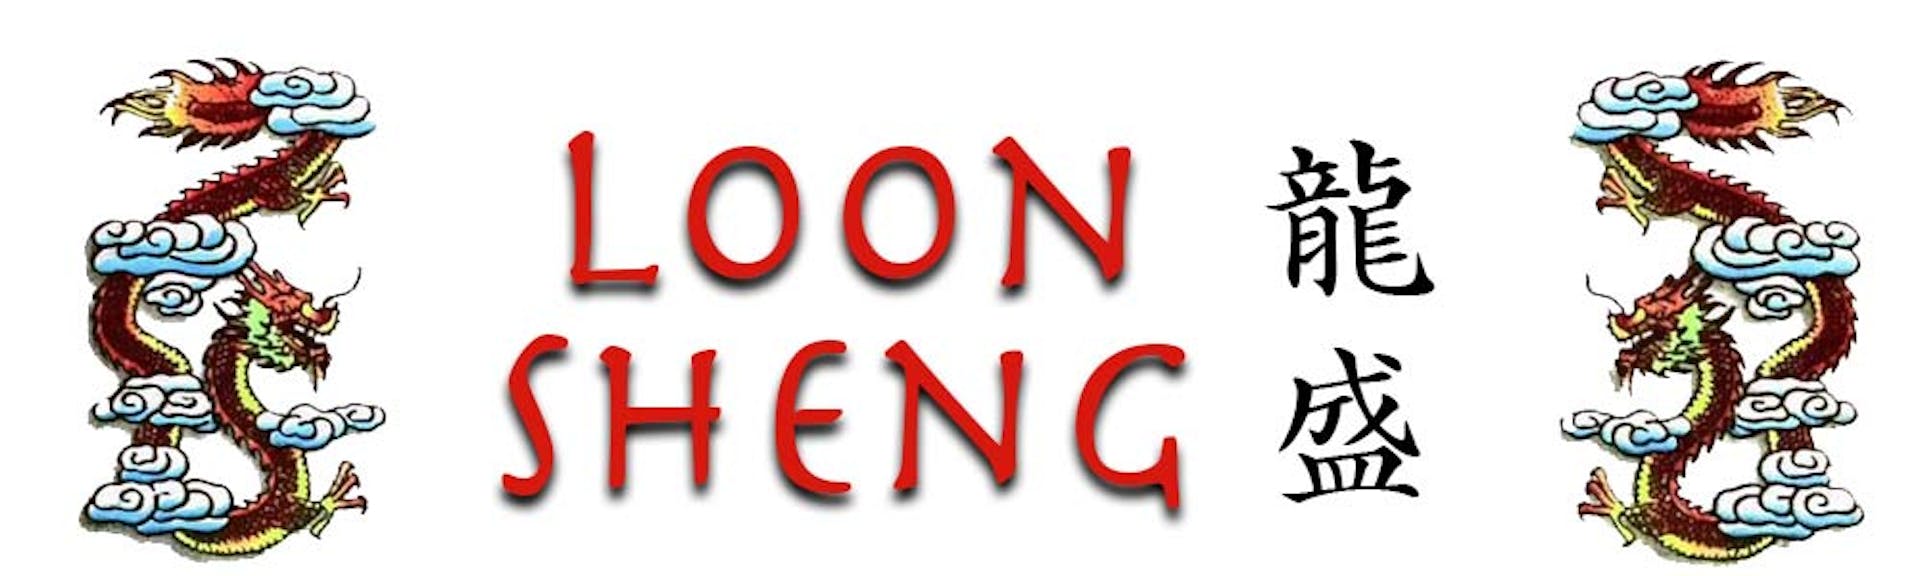 Loon Sheng Columbia Mo 65202 Menu Order Online